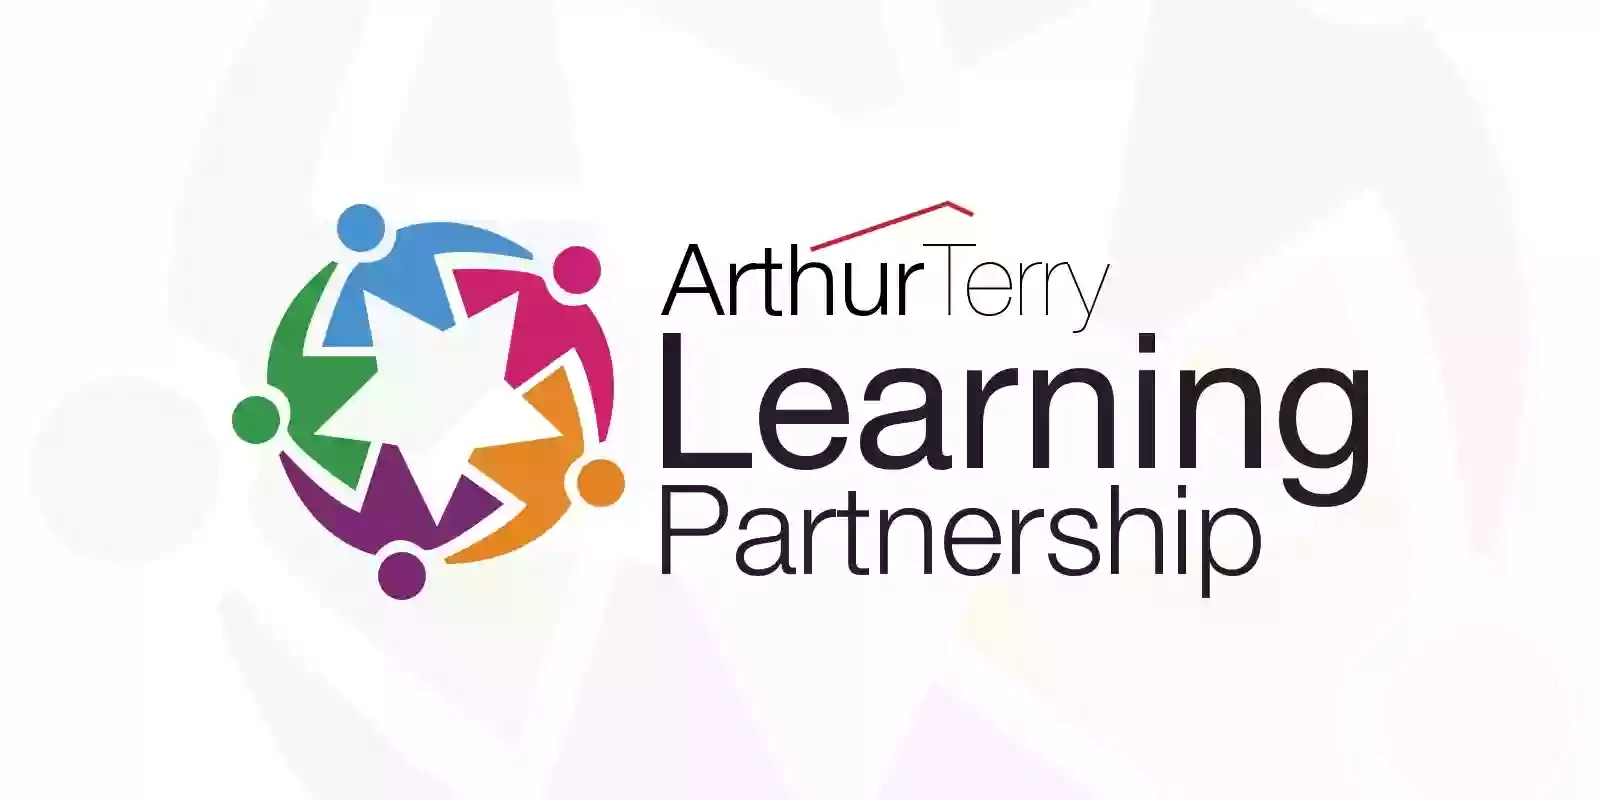 The Arthur Terry Learning Partnership